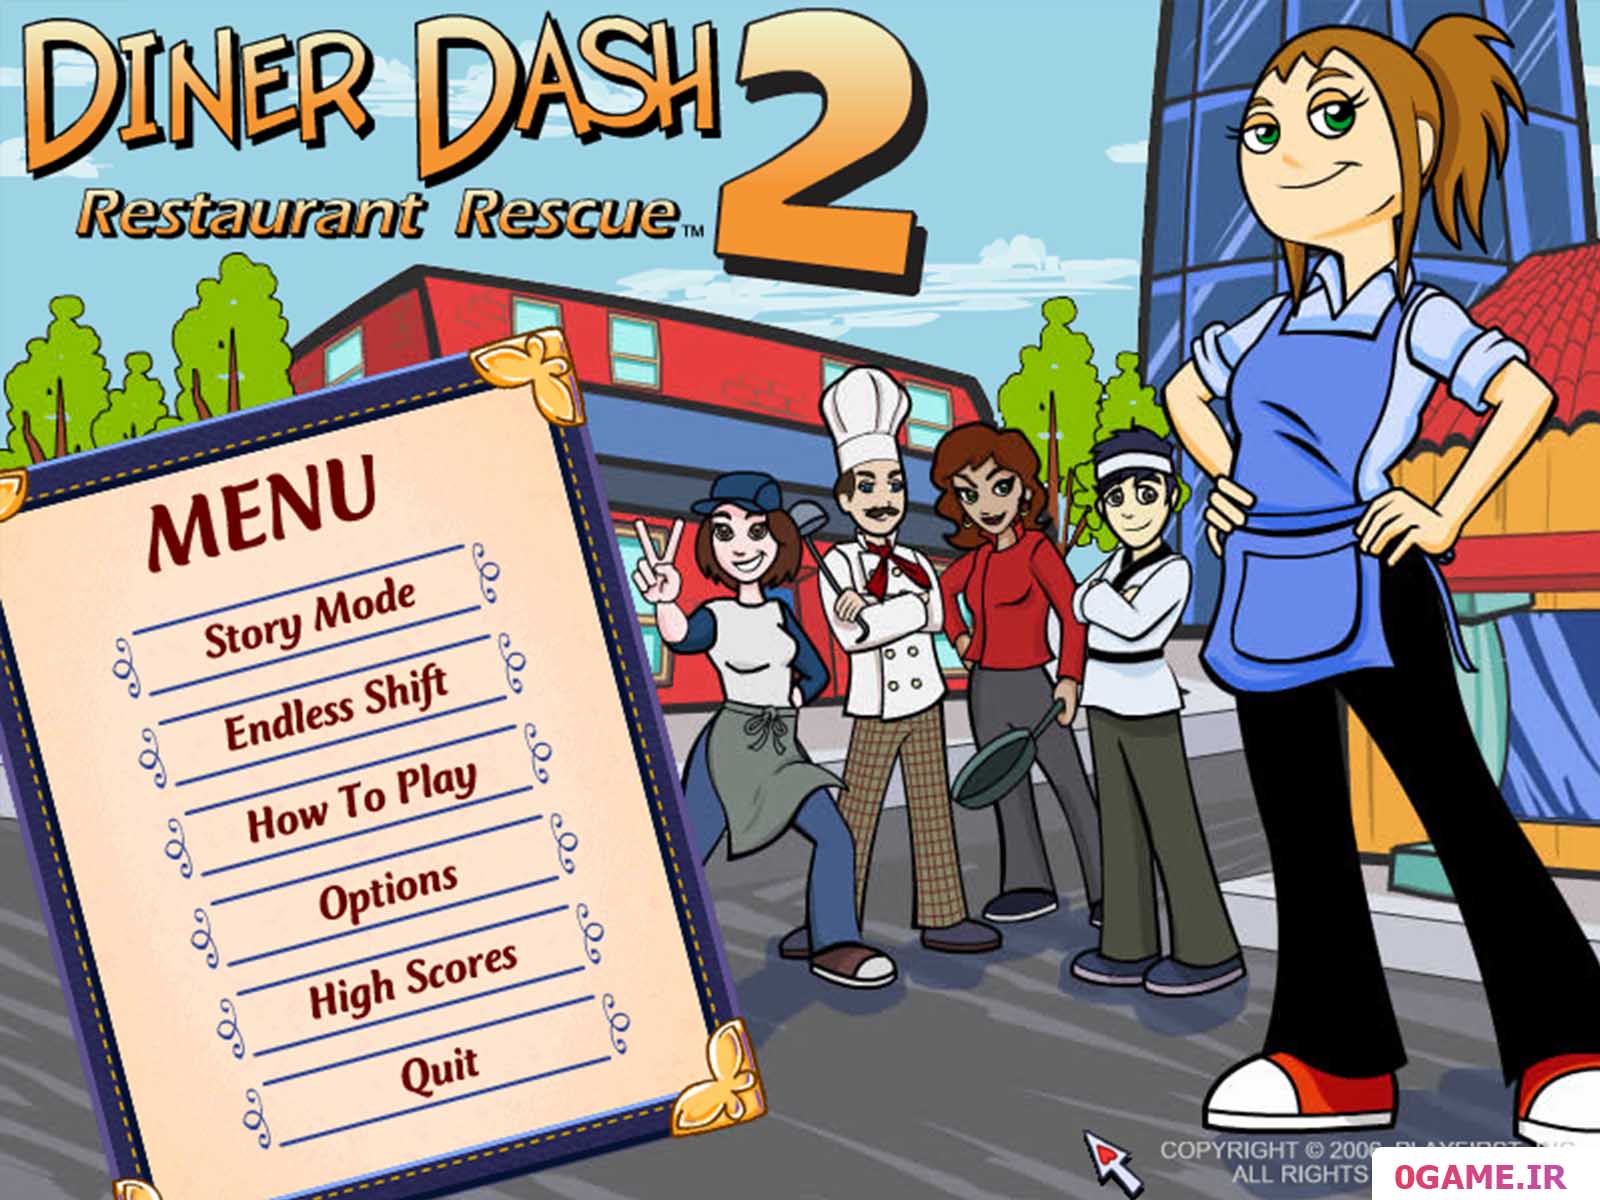 2-diner-dash-2-restaurant-rescue